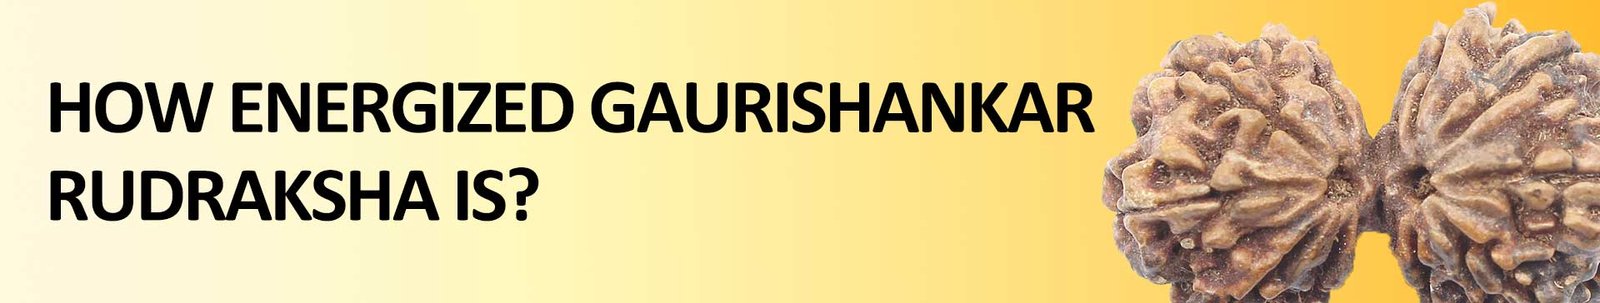 How energized Gaurishankar Rudraksha is?